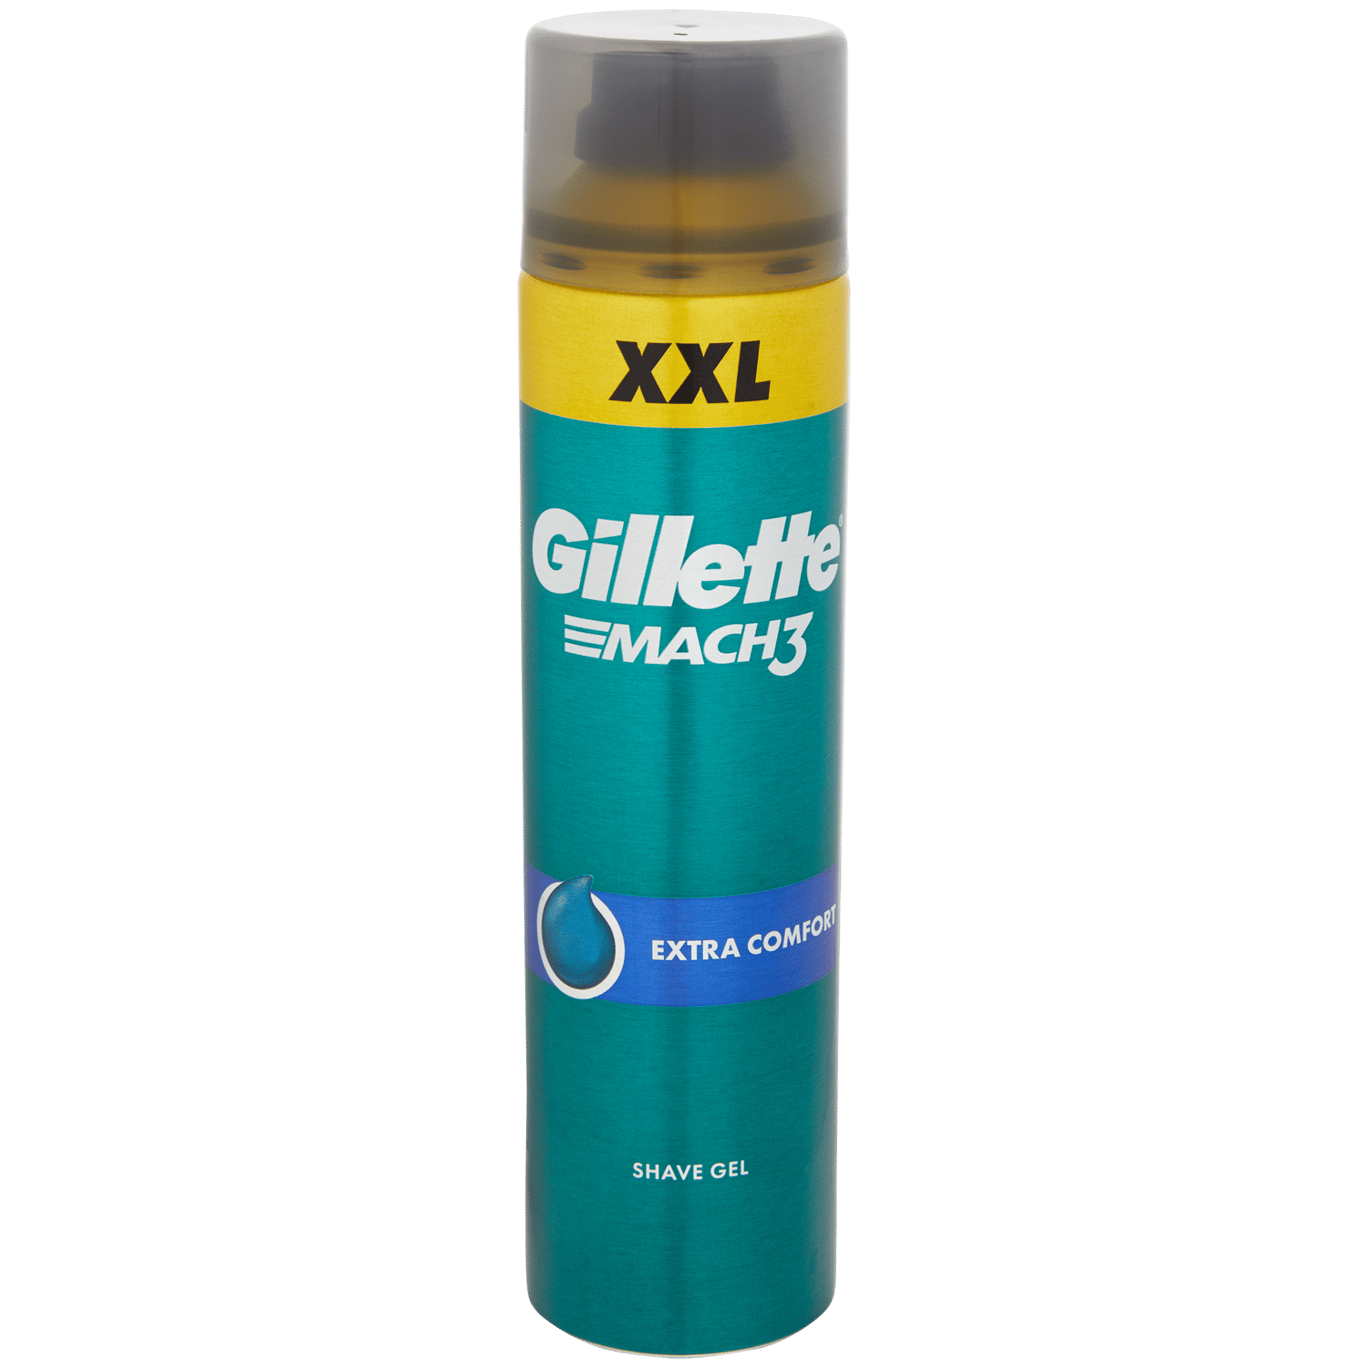 Żel do golenia Gillette Mach3 XXL